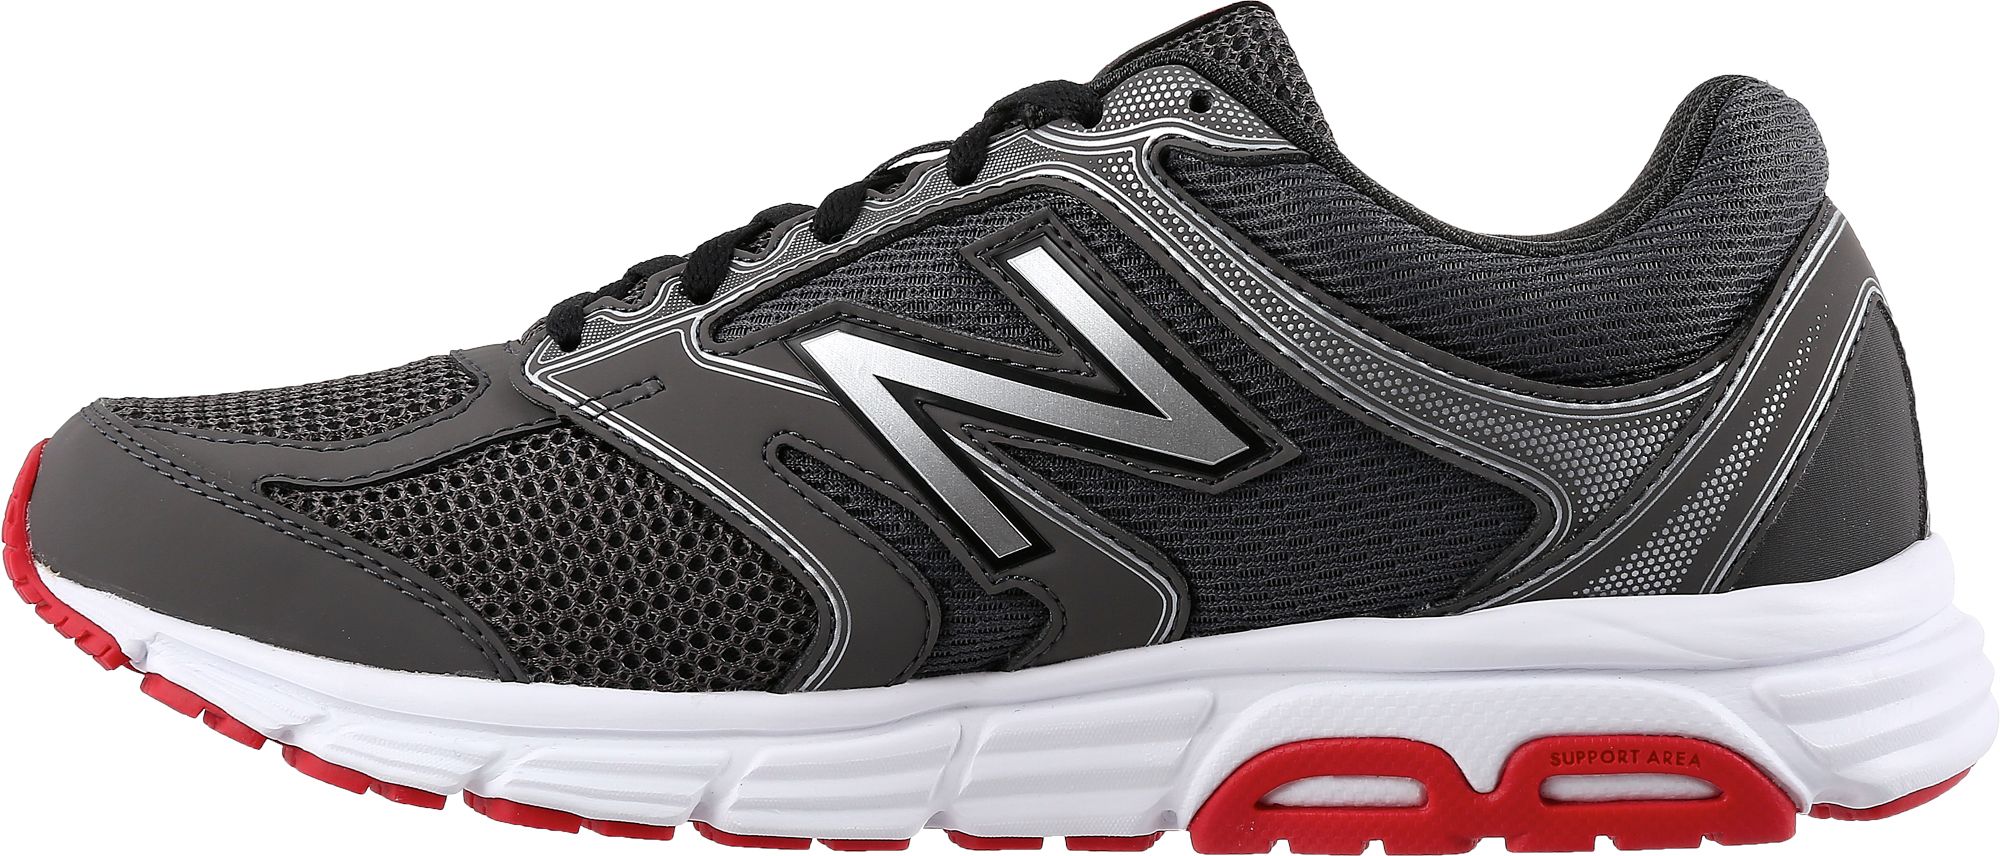 new balance men's 470 running shoes